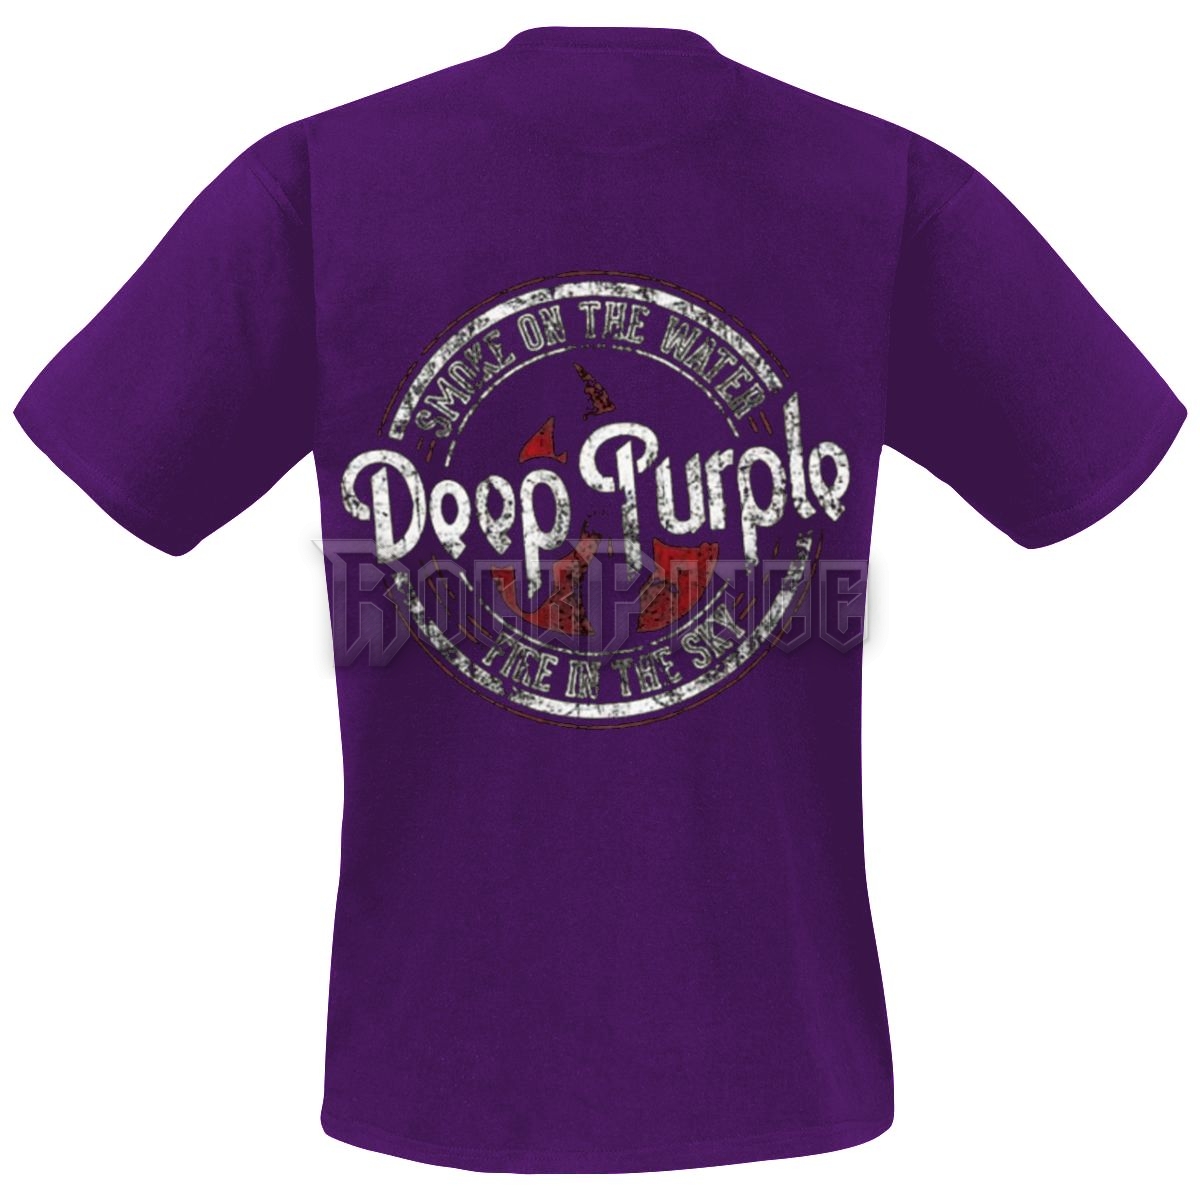 Deep Purple - Fire in the Sky - UNISEX PÓLÓ - LILA